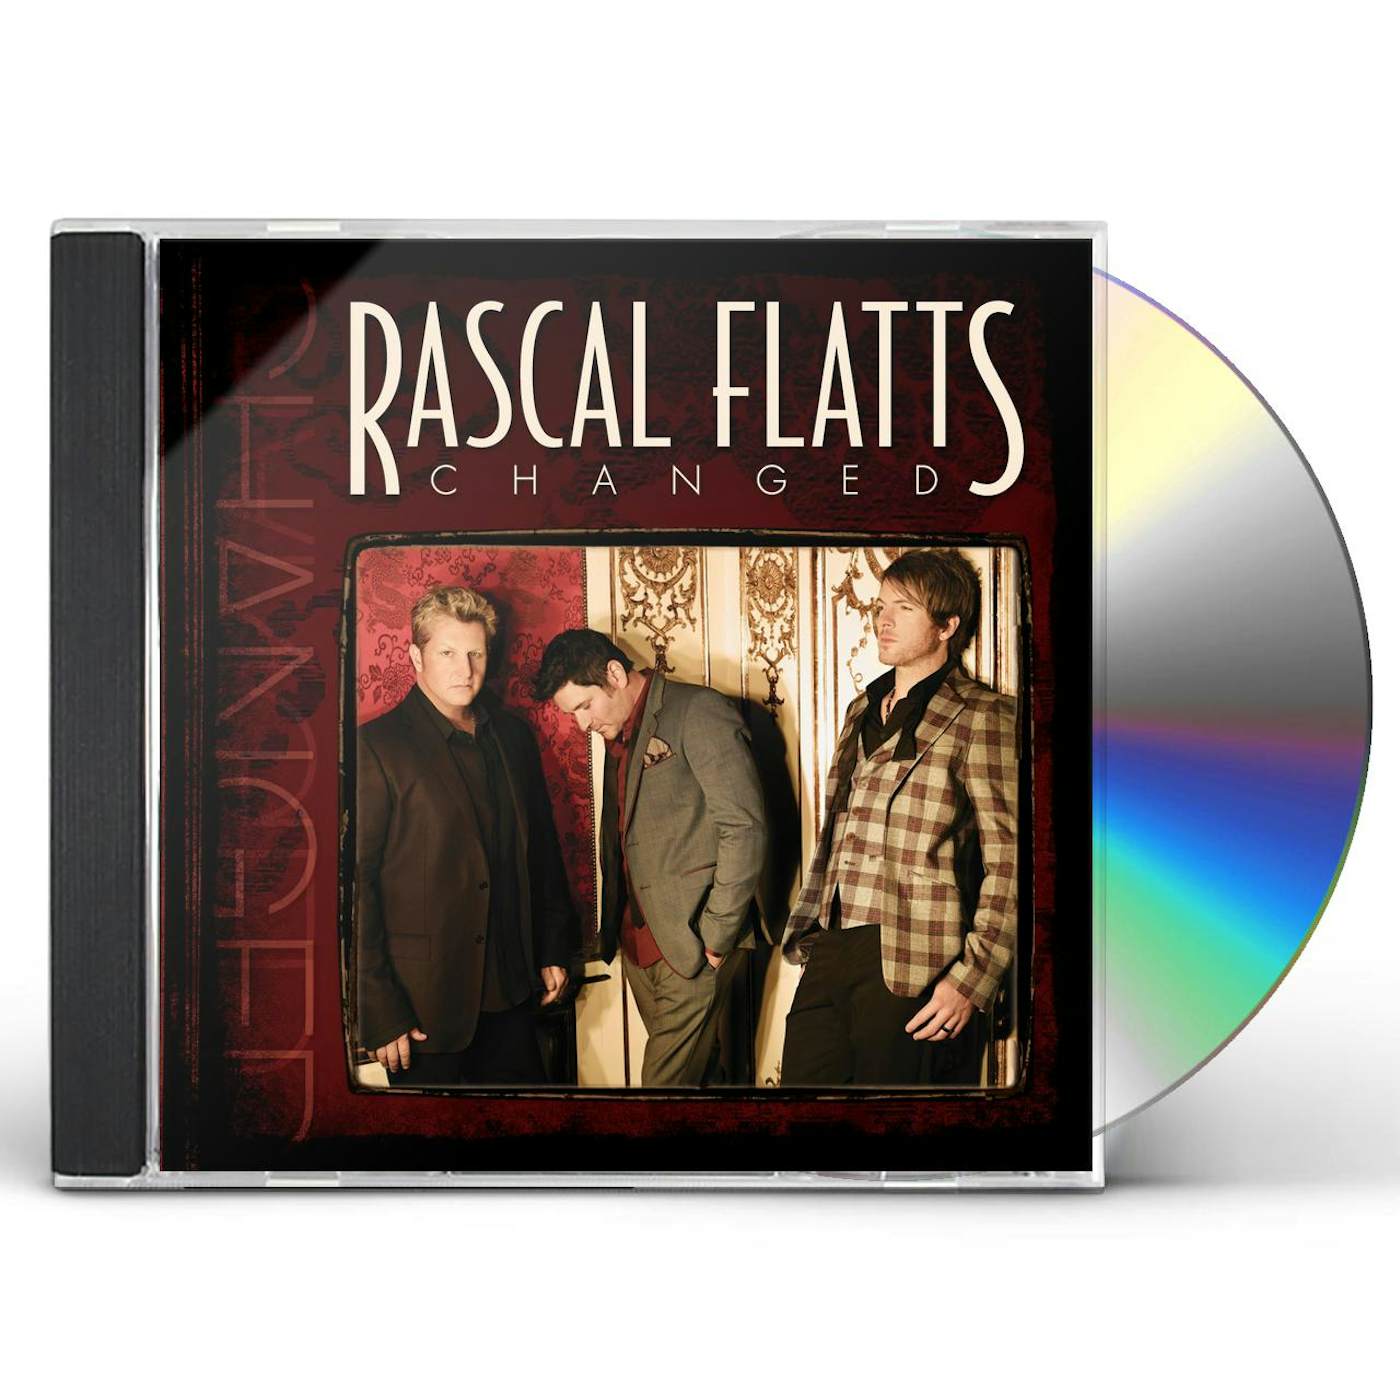 Rascal Flatts CHANGED CD